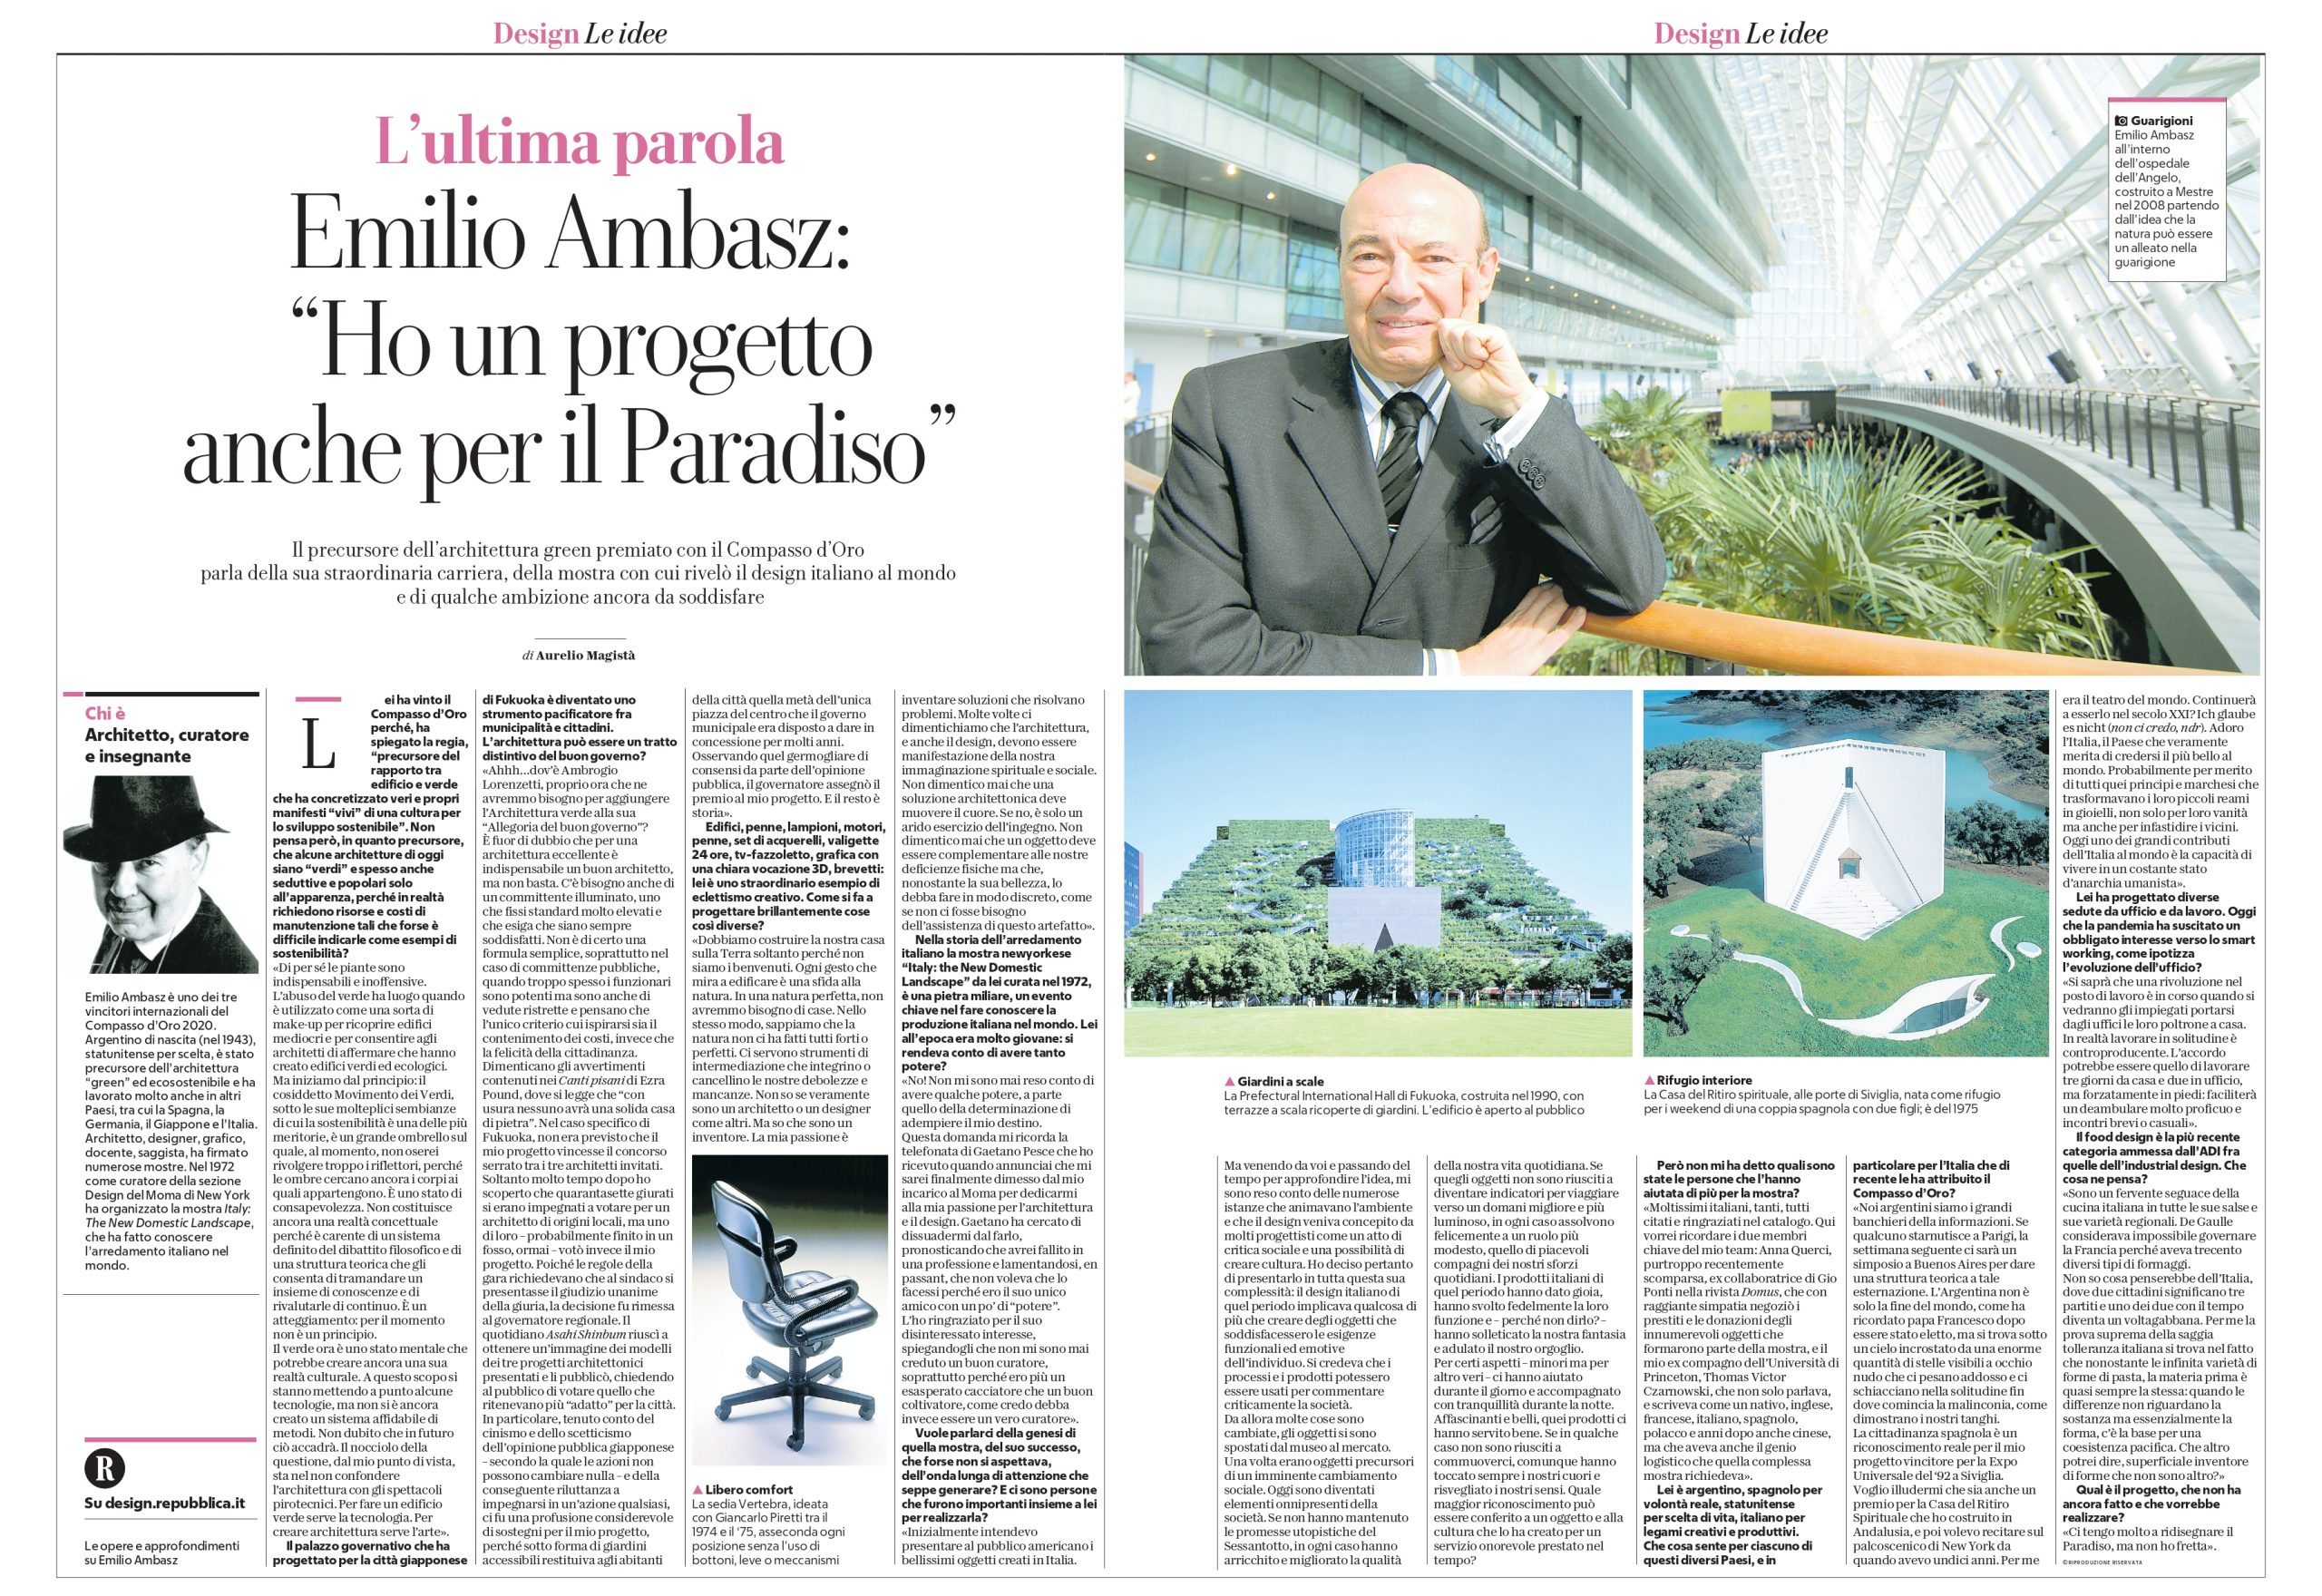 Design.Repubblica: 2 pagine su Emilio Ambasz